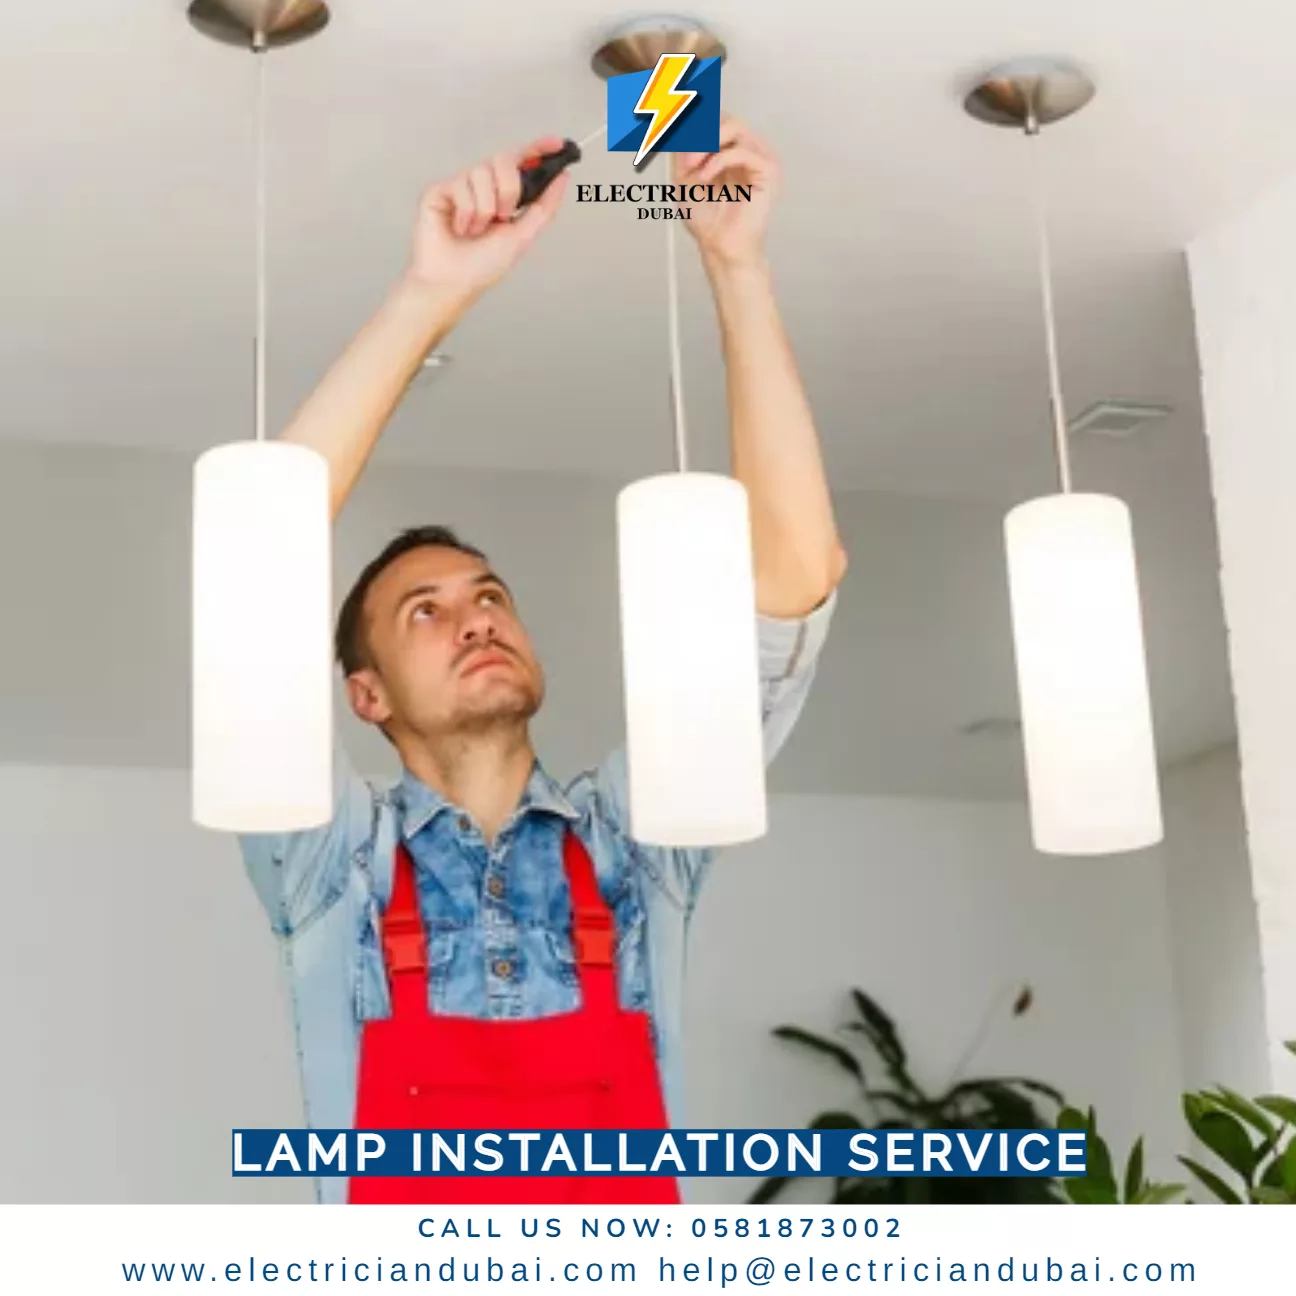 Lamp Installation service